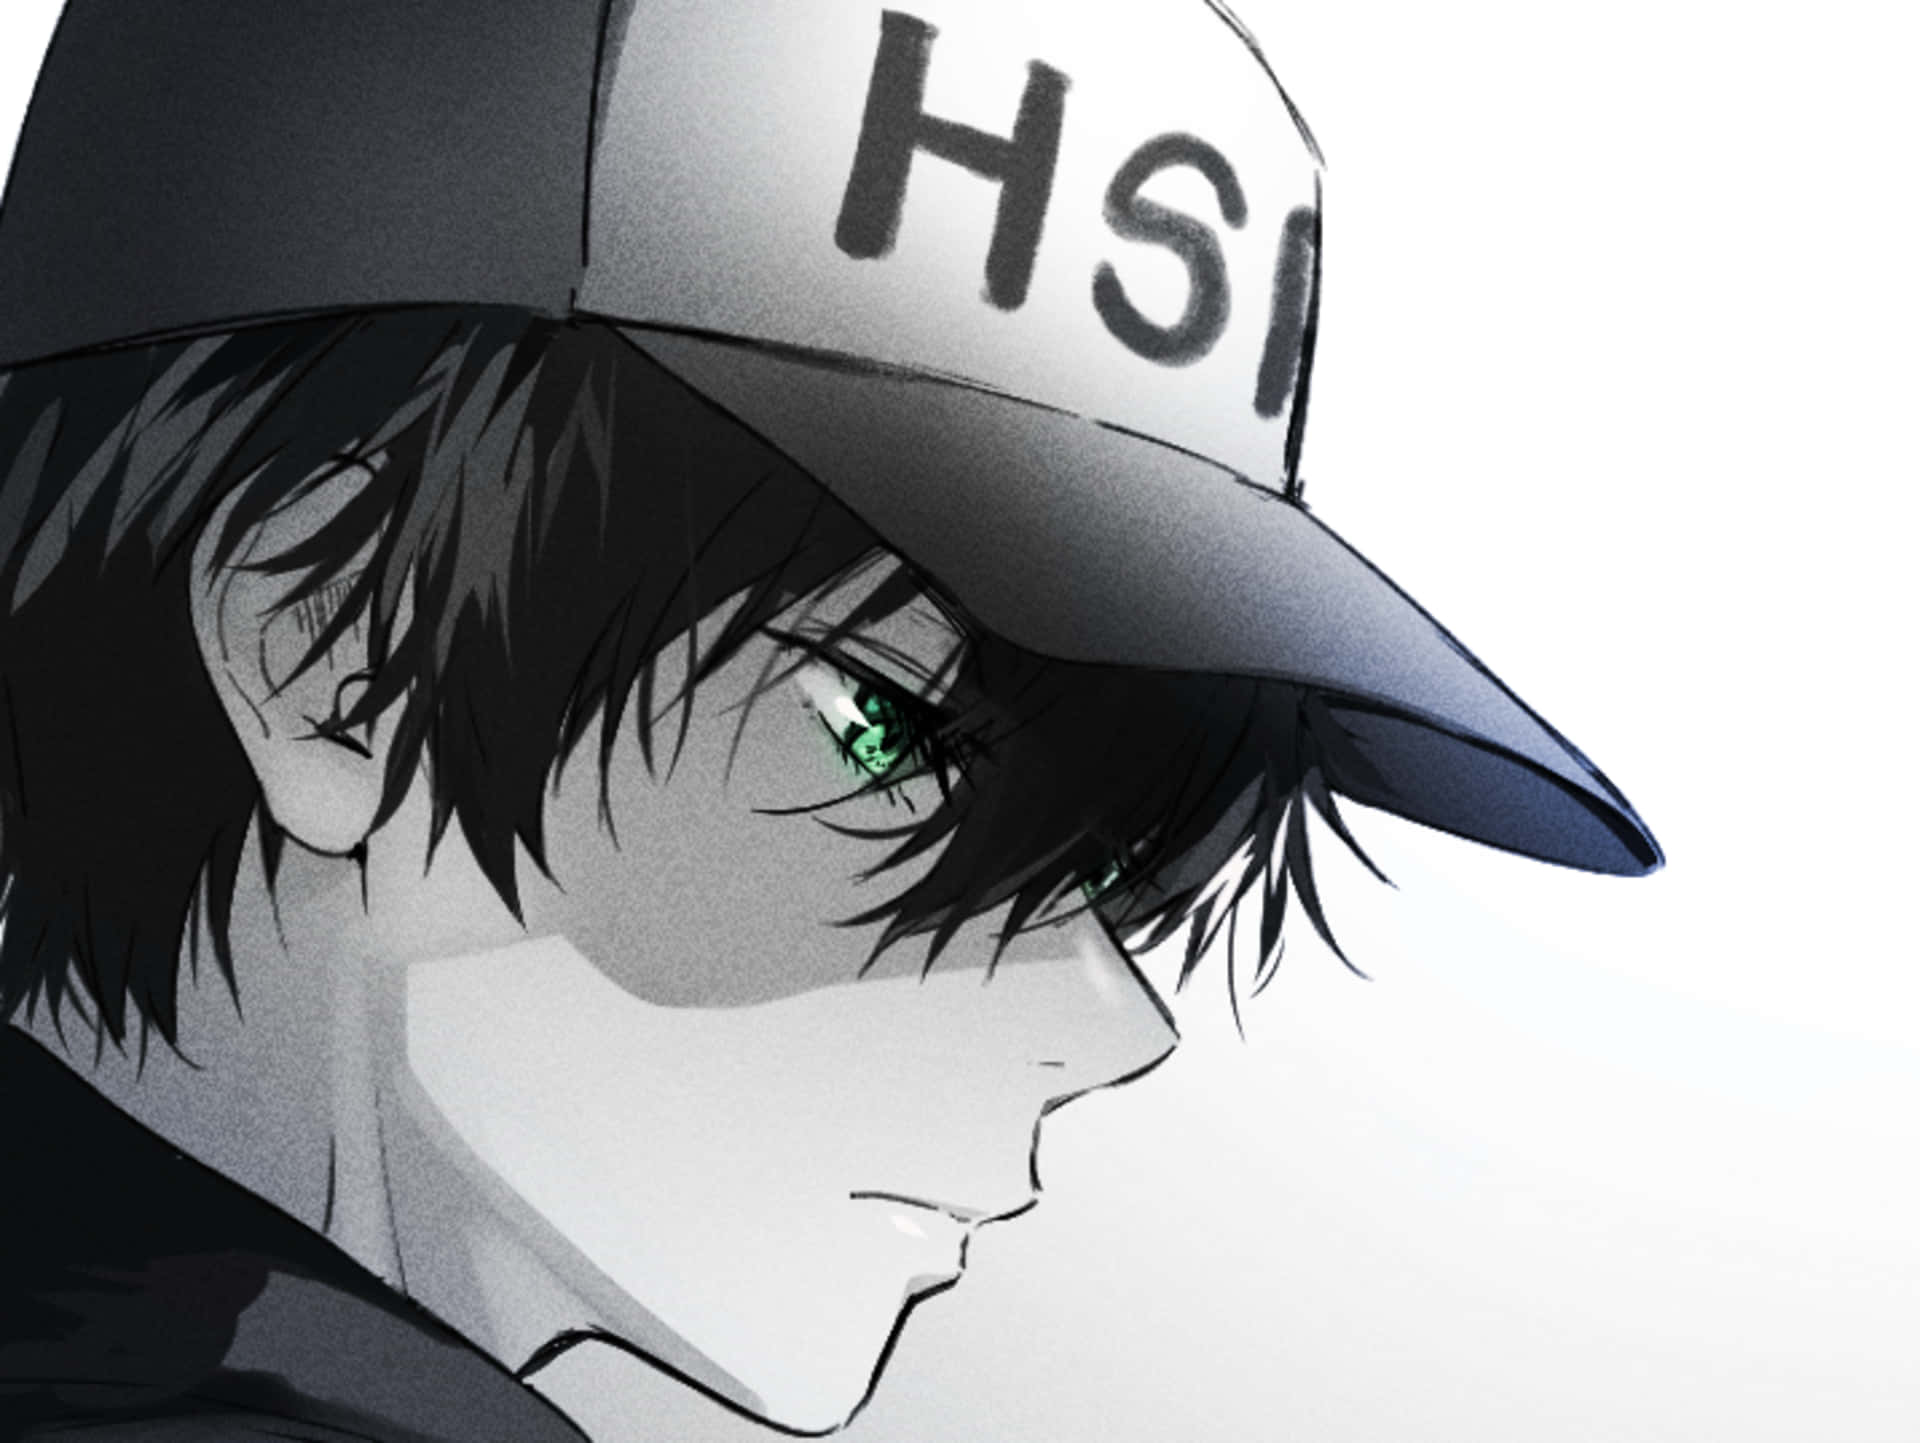 Hotaro Oreki Side Profile With A Cap Background